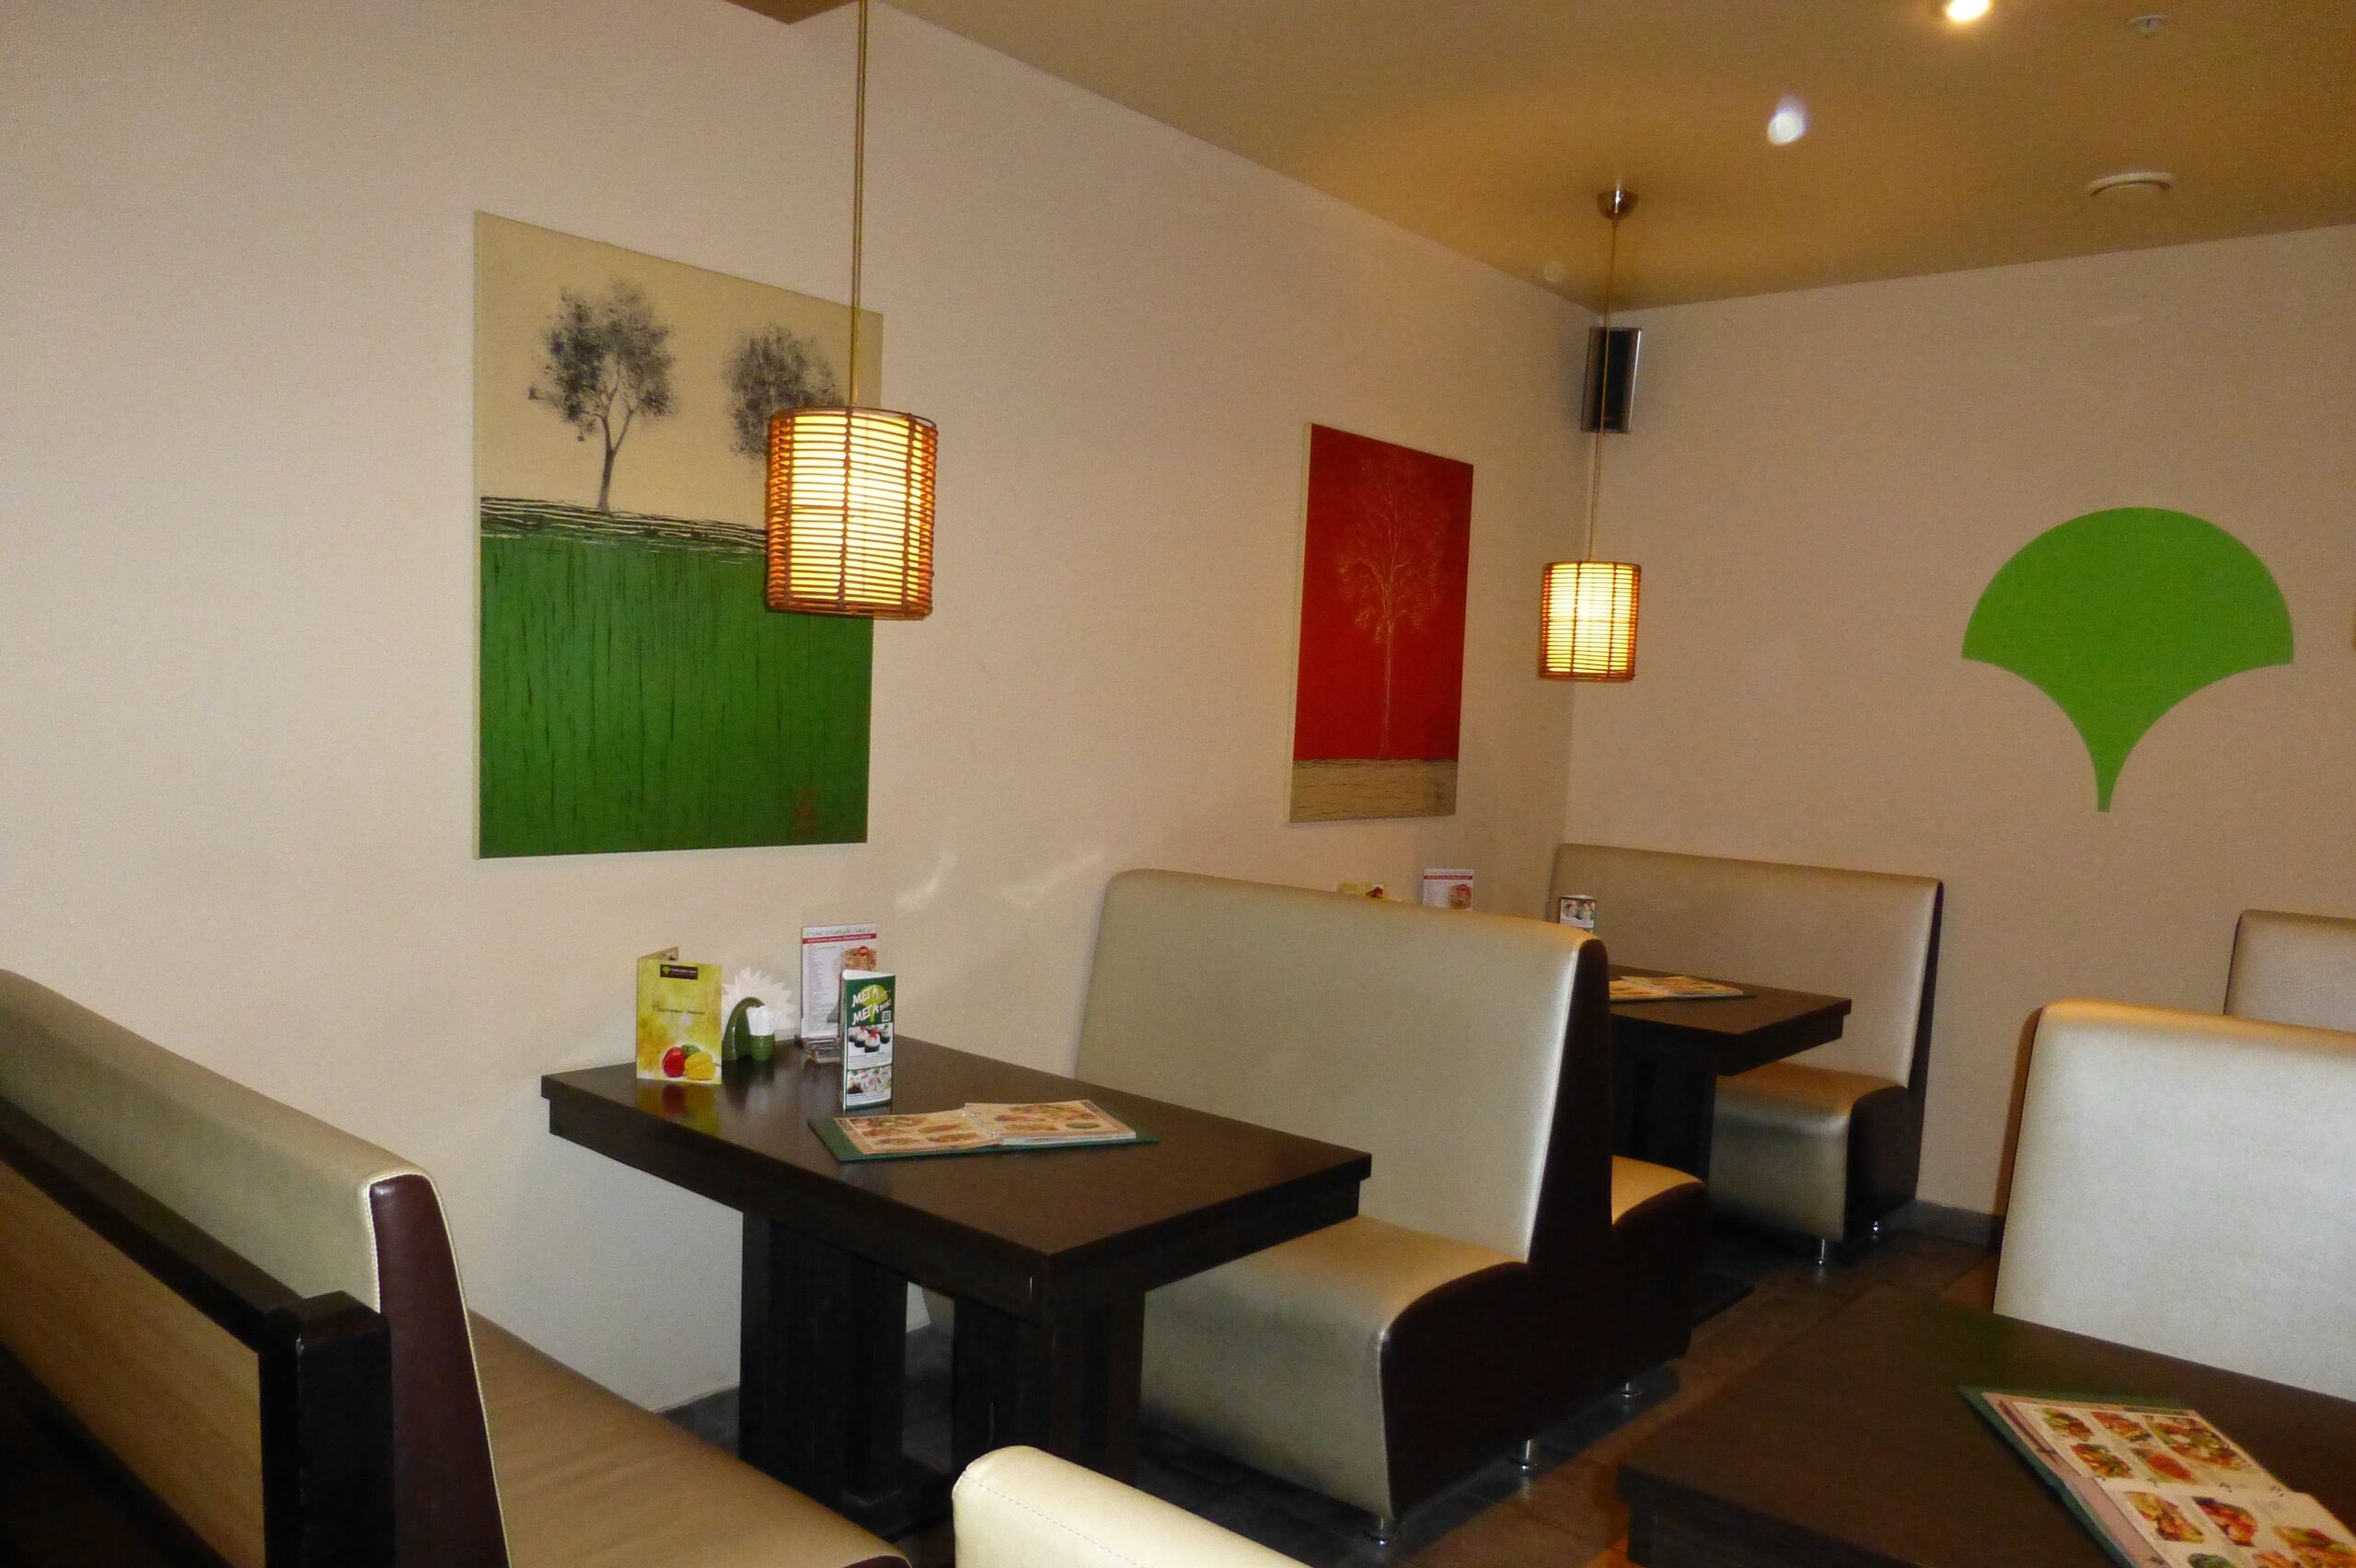 вид оформления Рестораны Токио Суши на 1 зал мест Краснодара